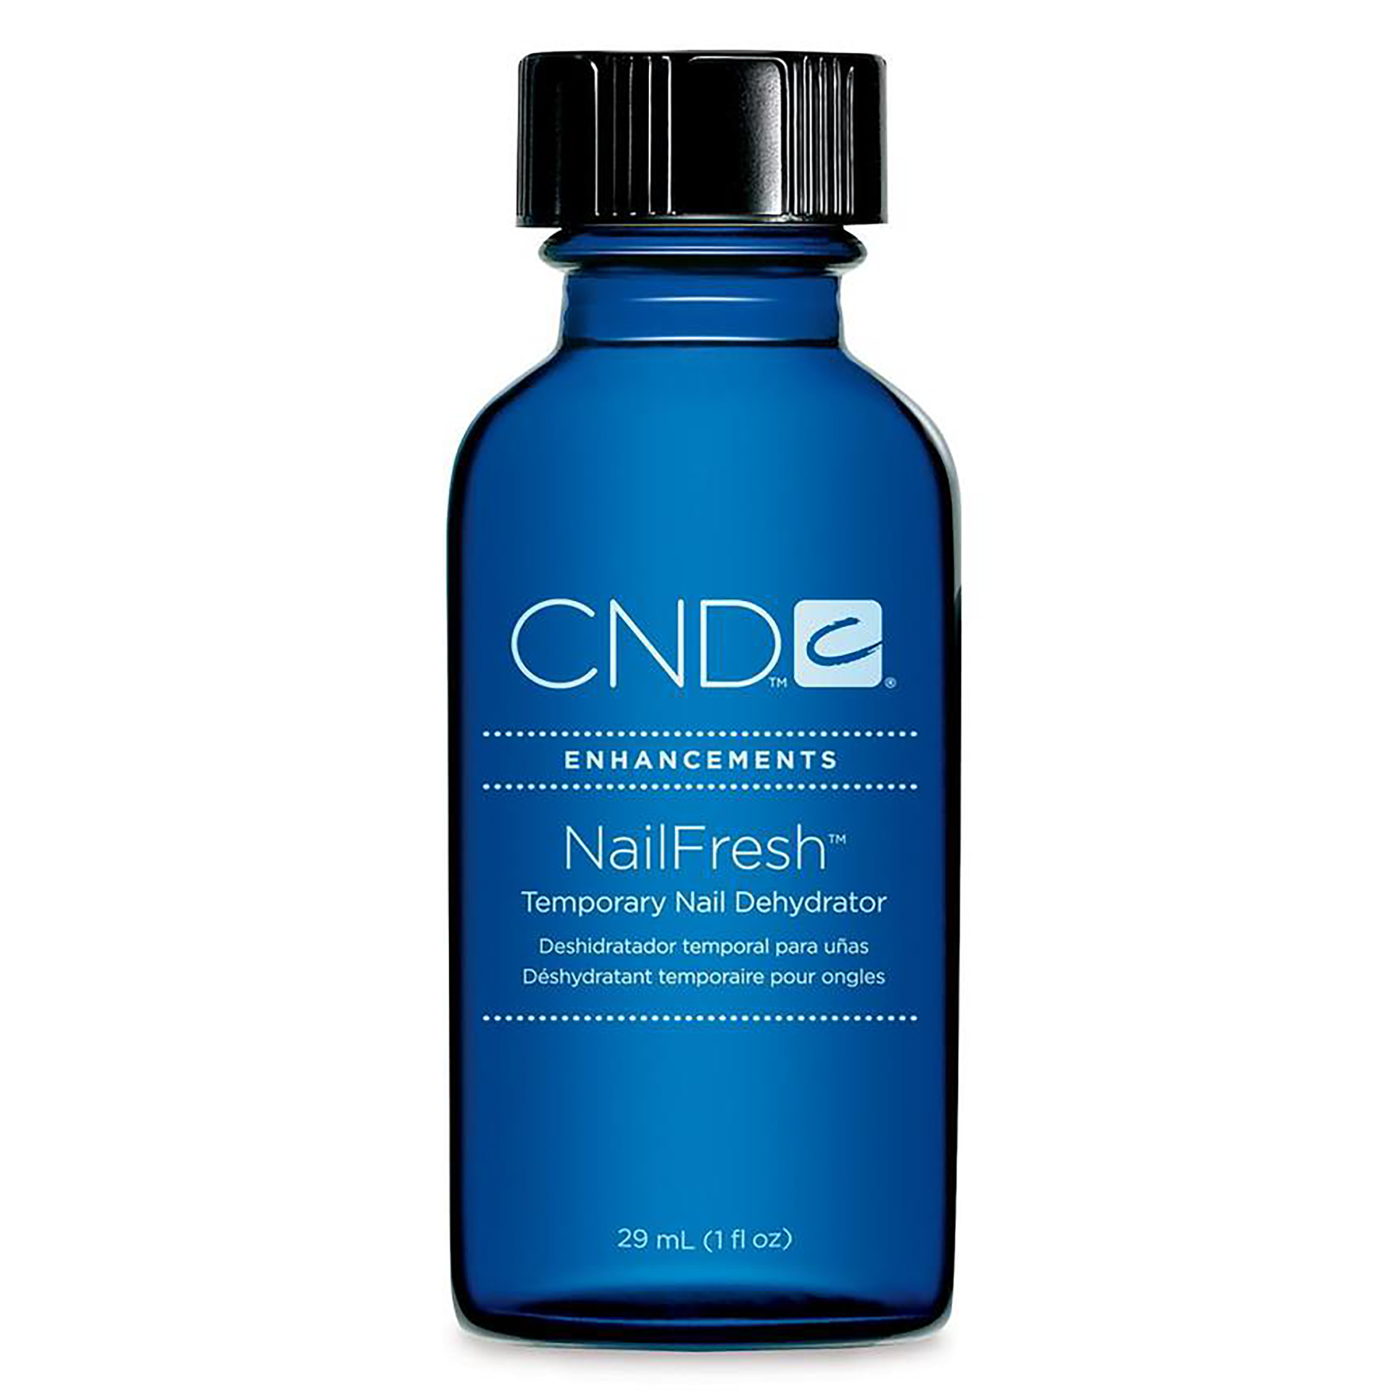 NailFresh™ Temporary Nail Dehydrator